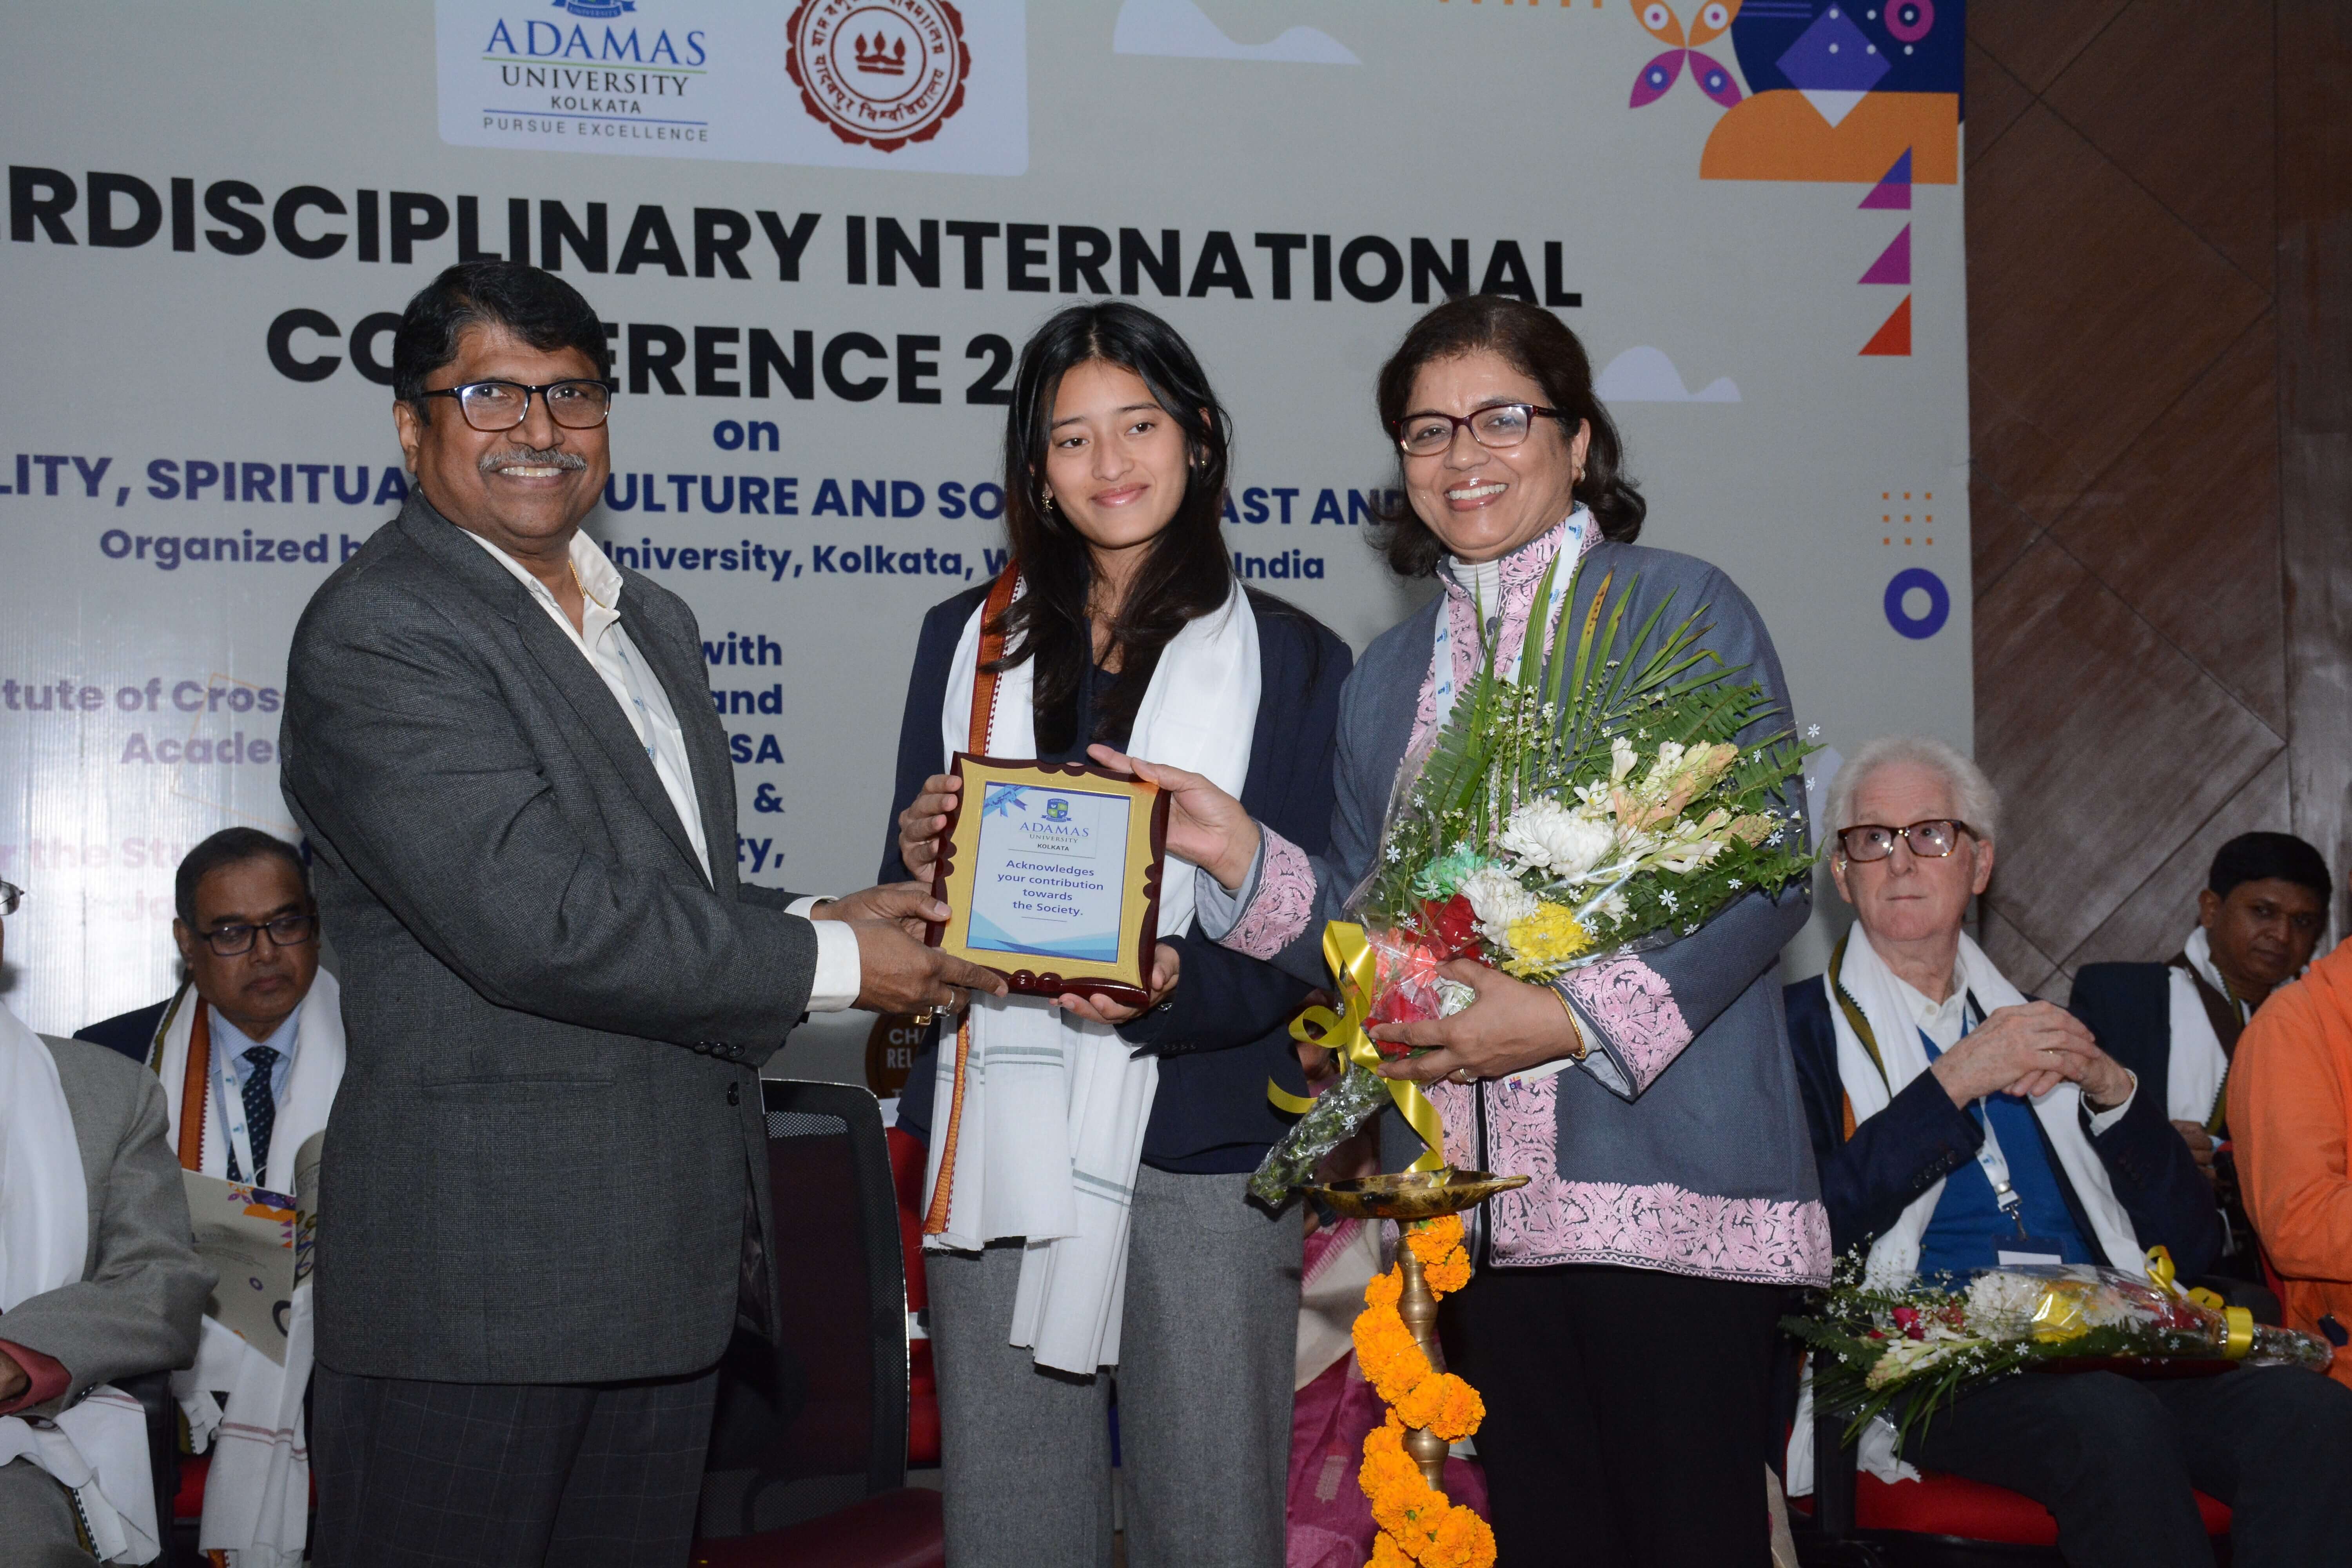 Prof. Rekha Datta and Honors School Student Lenien Jamir at the Interdisciplinary International Conference